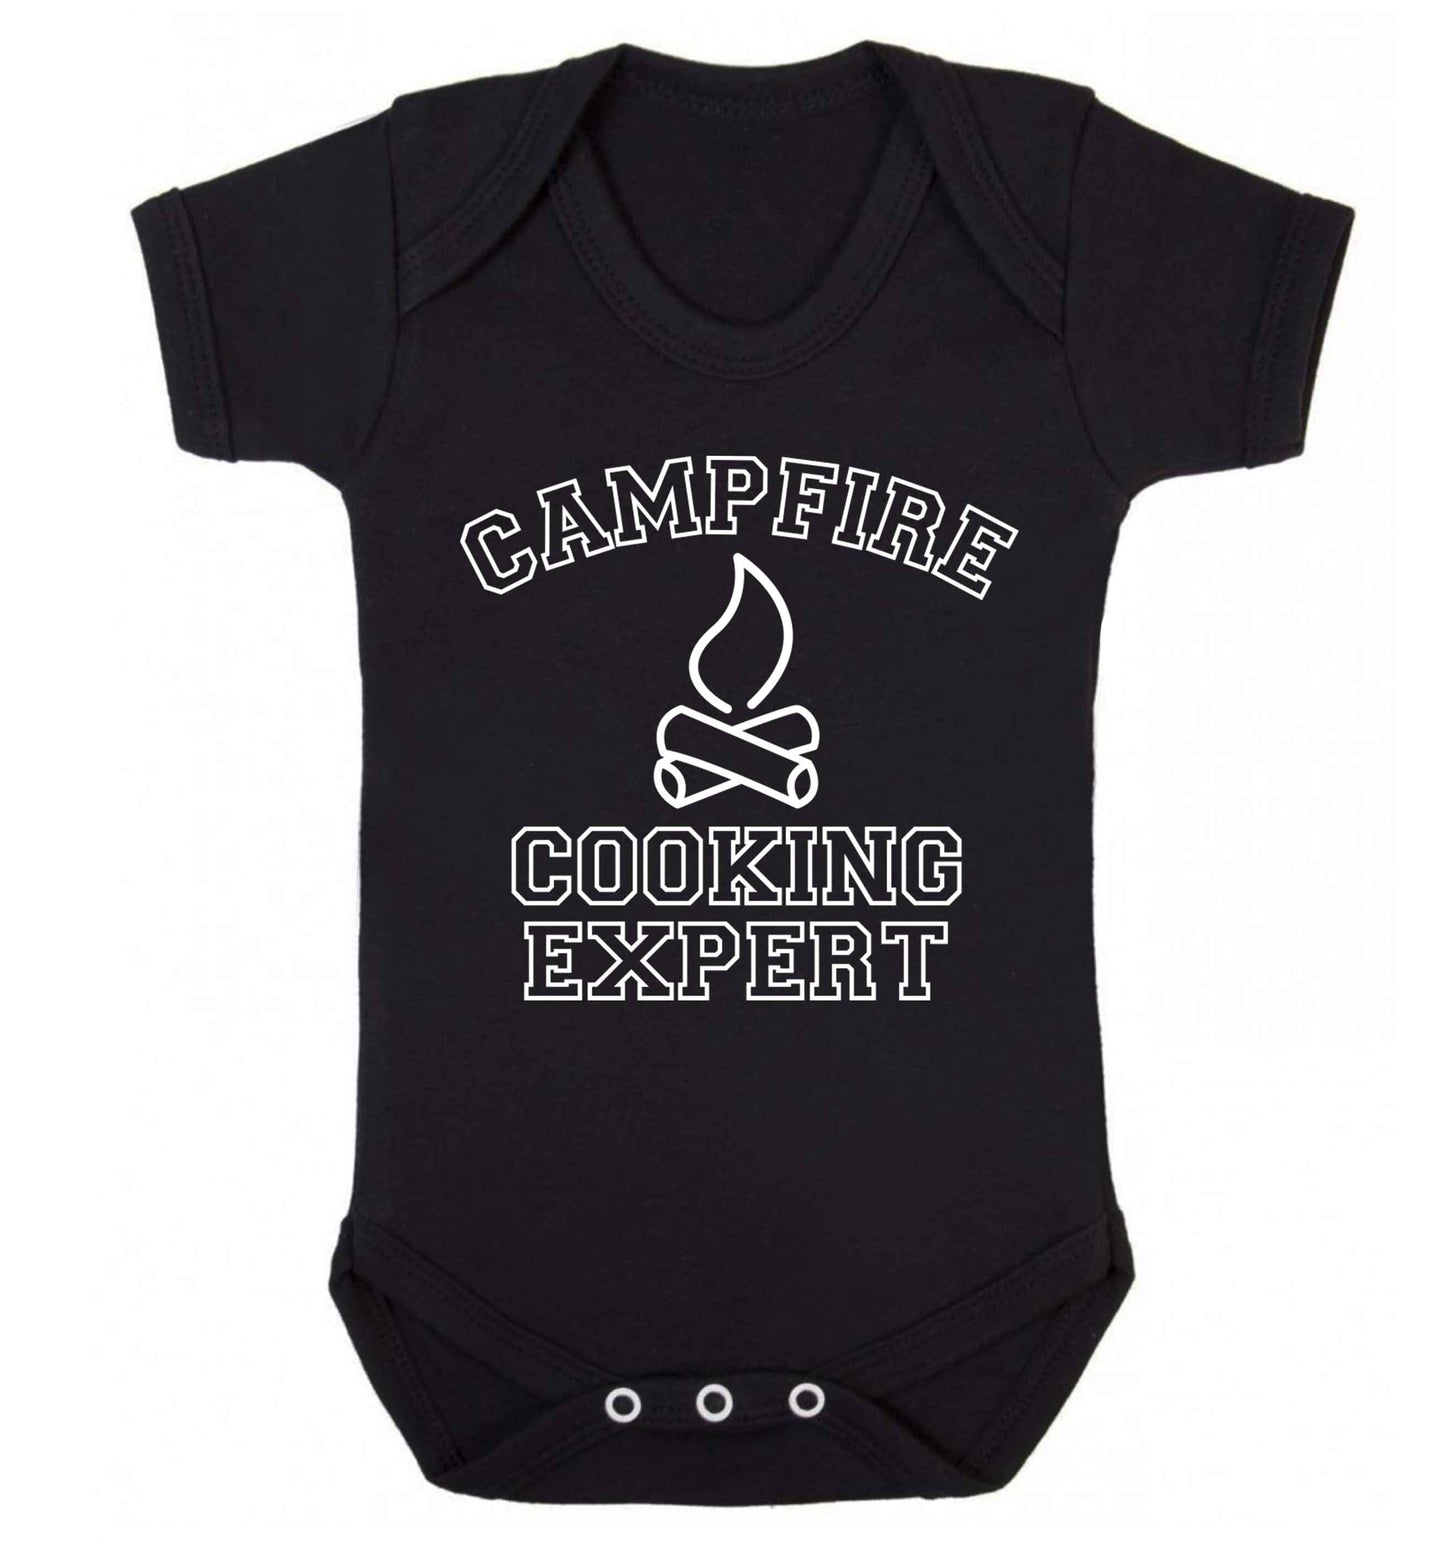 Campfire cooking expert Baby Vest black 18-24 months